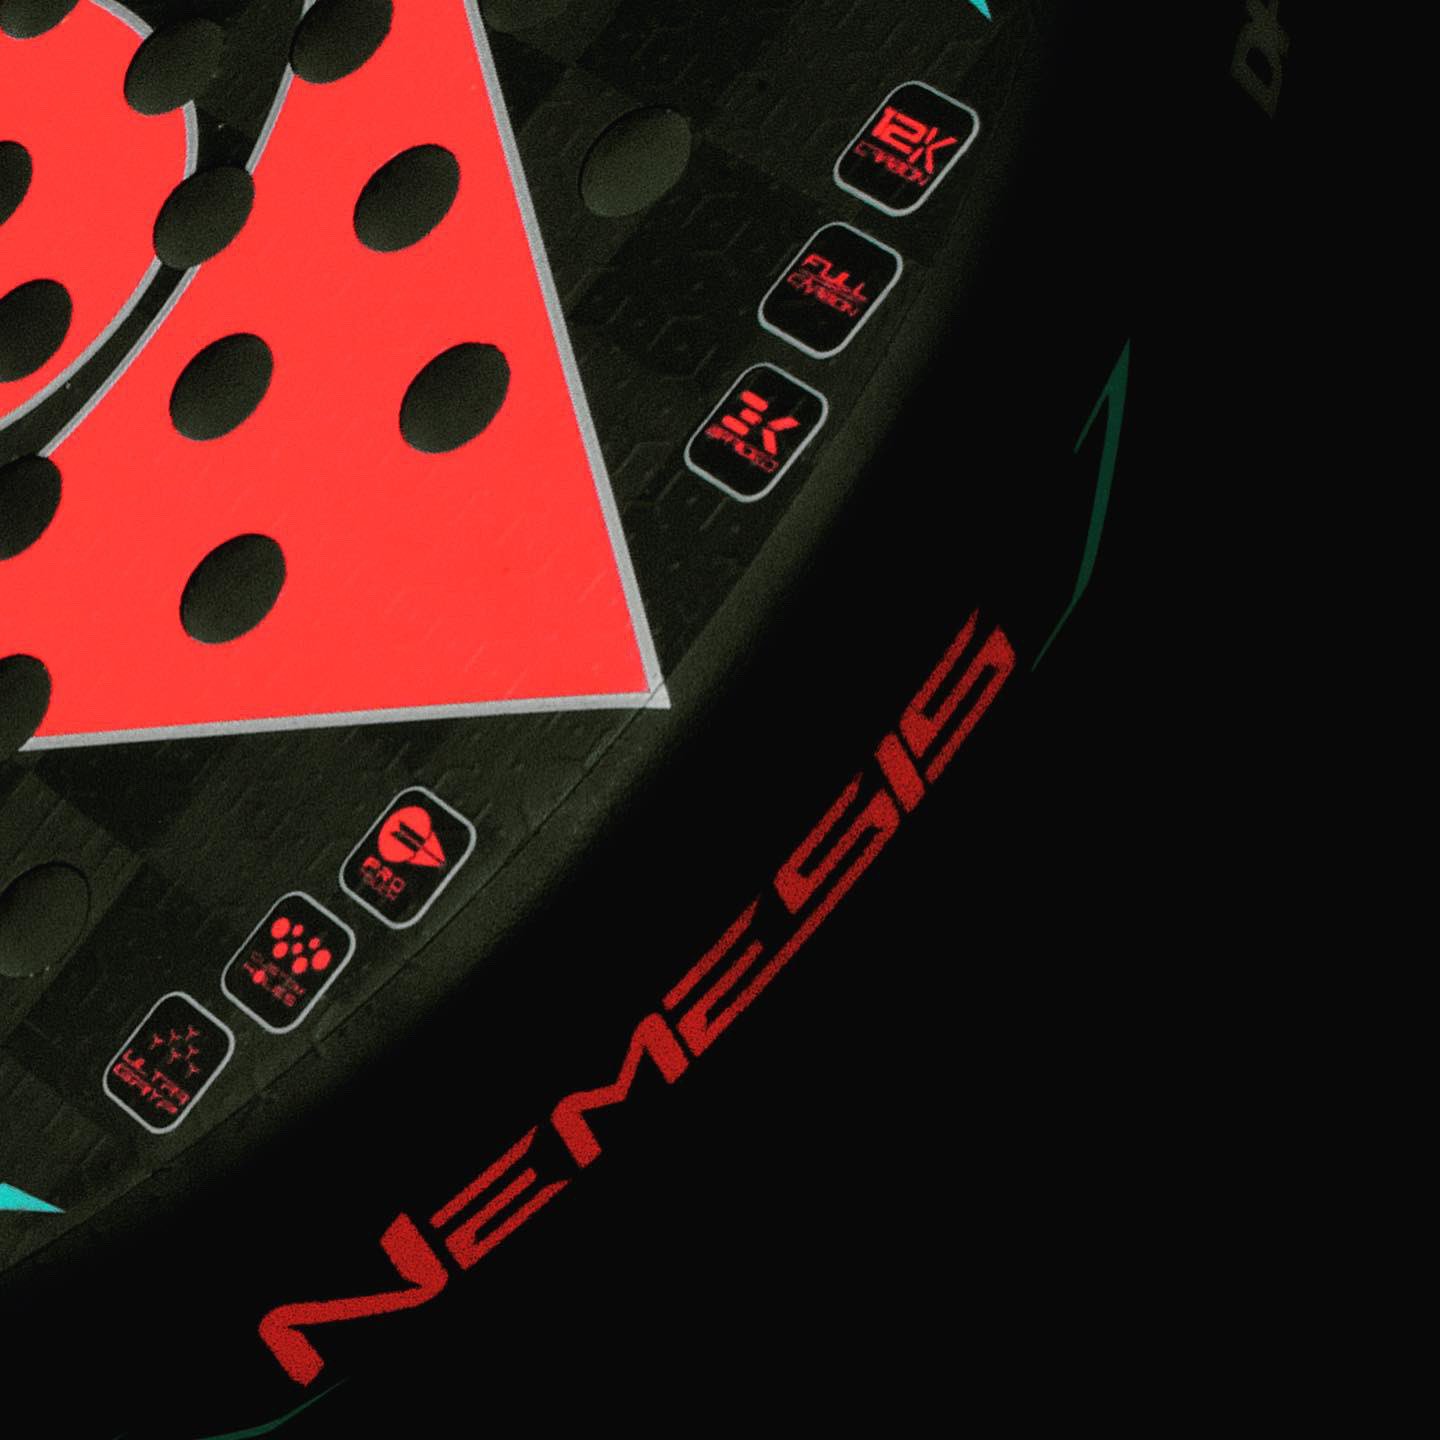 The new Dunlop Nemesis